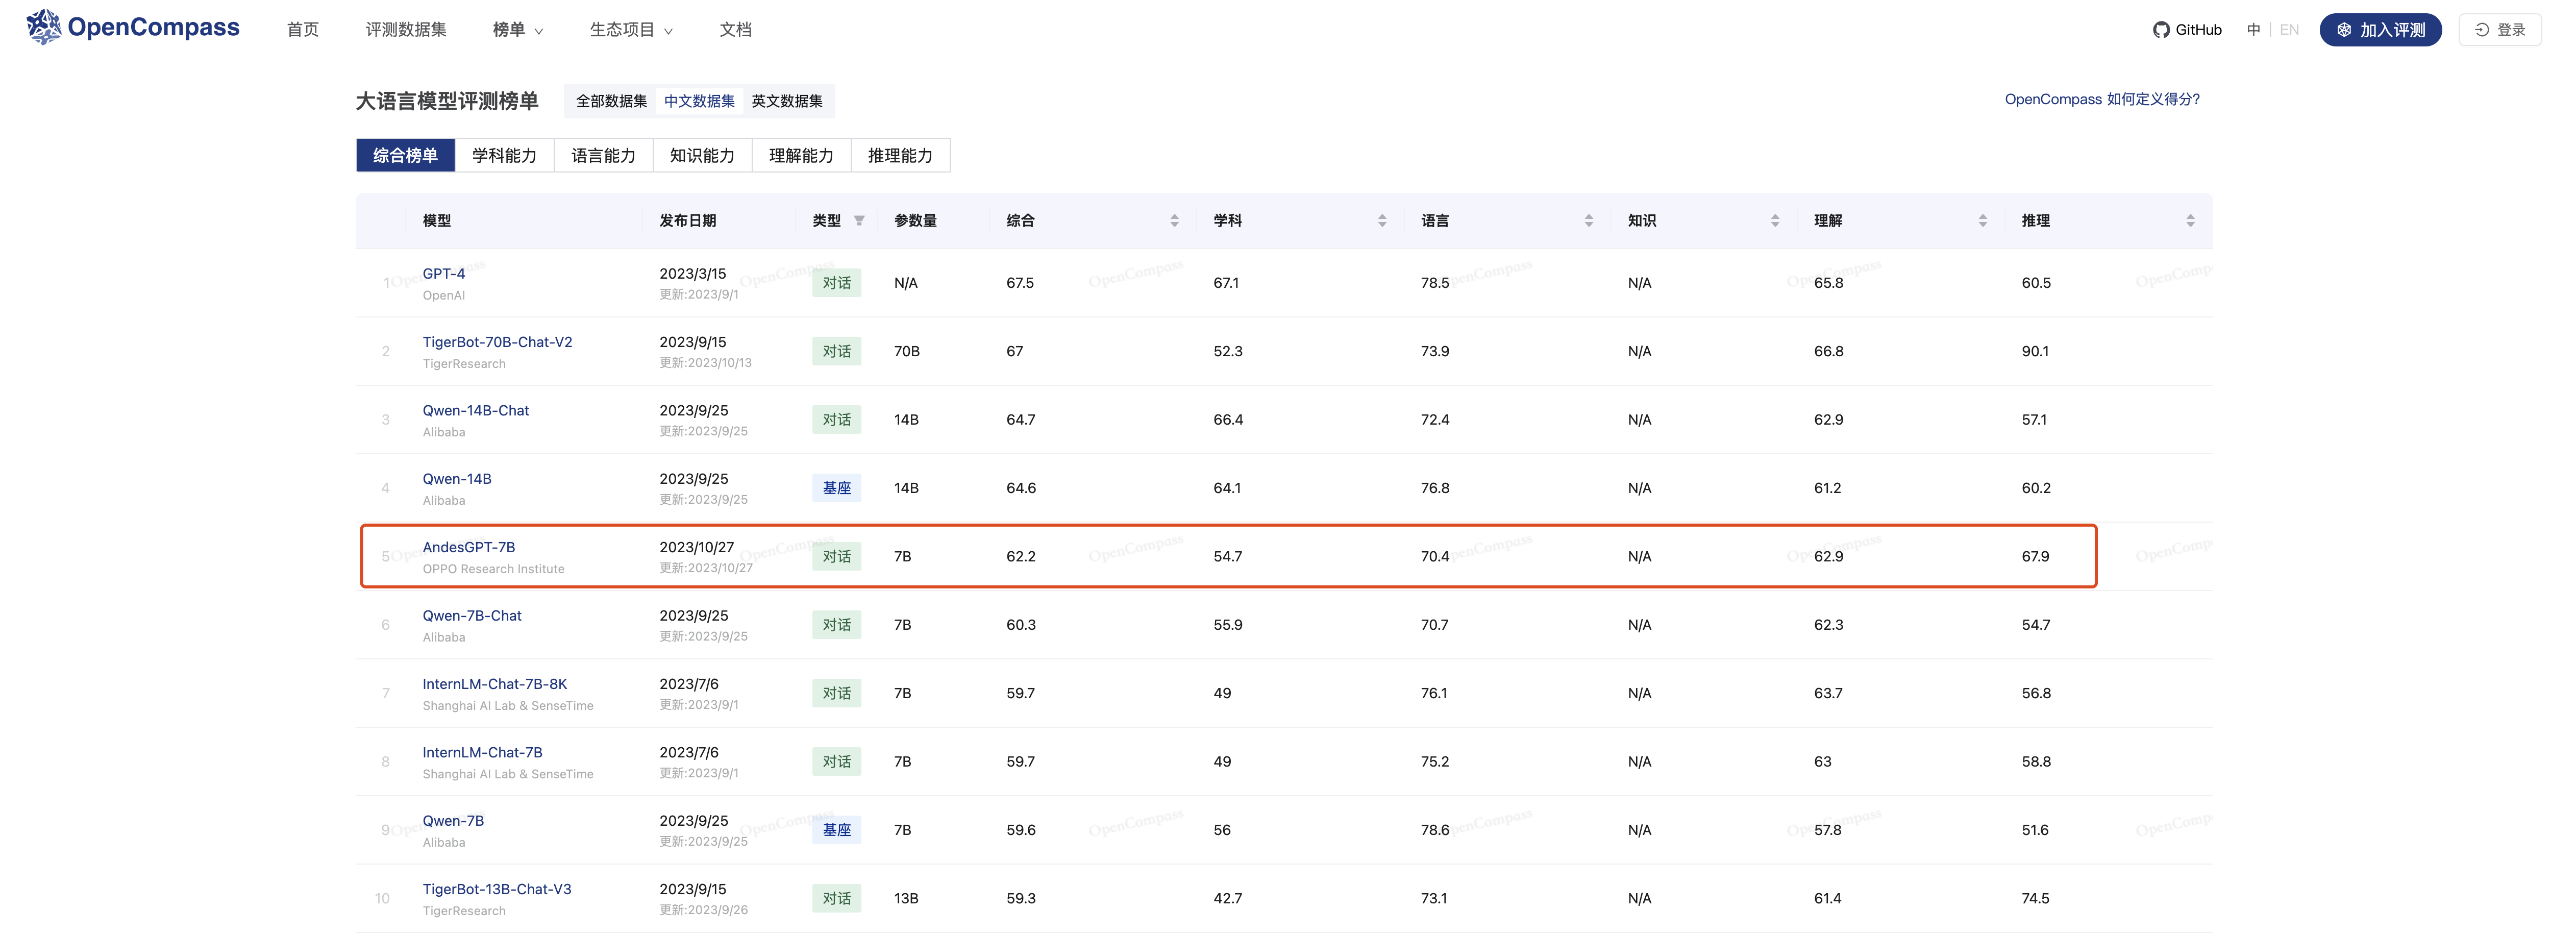 (OpenCompass大说话模子评测榜单-华文数据集 2023/10/30)